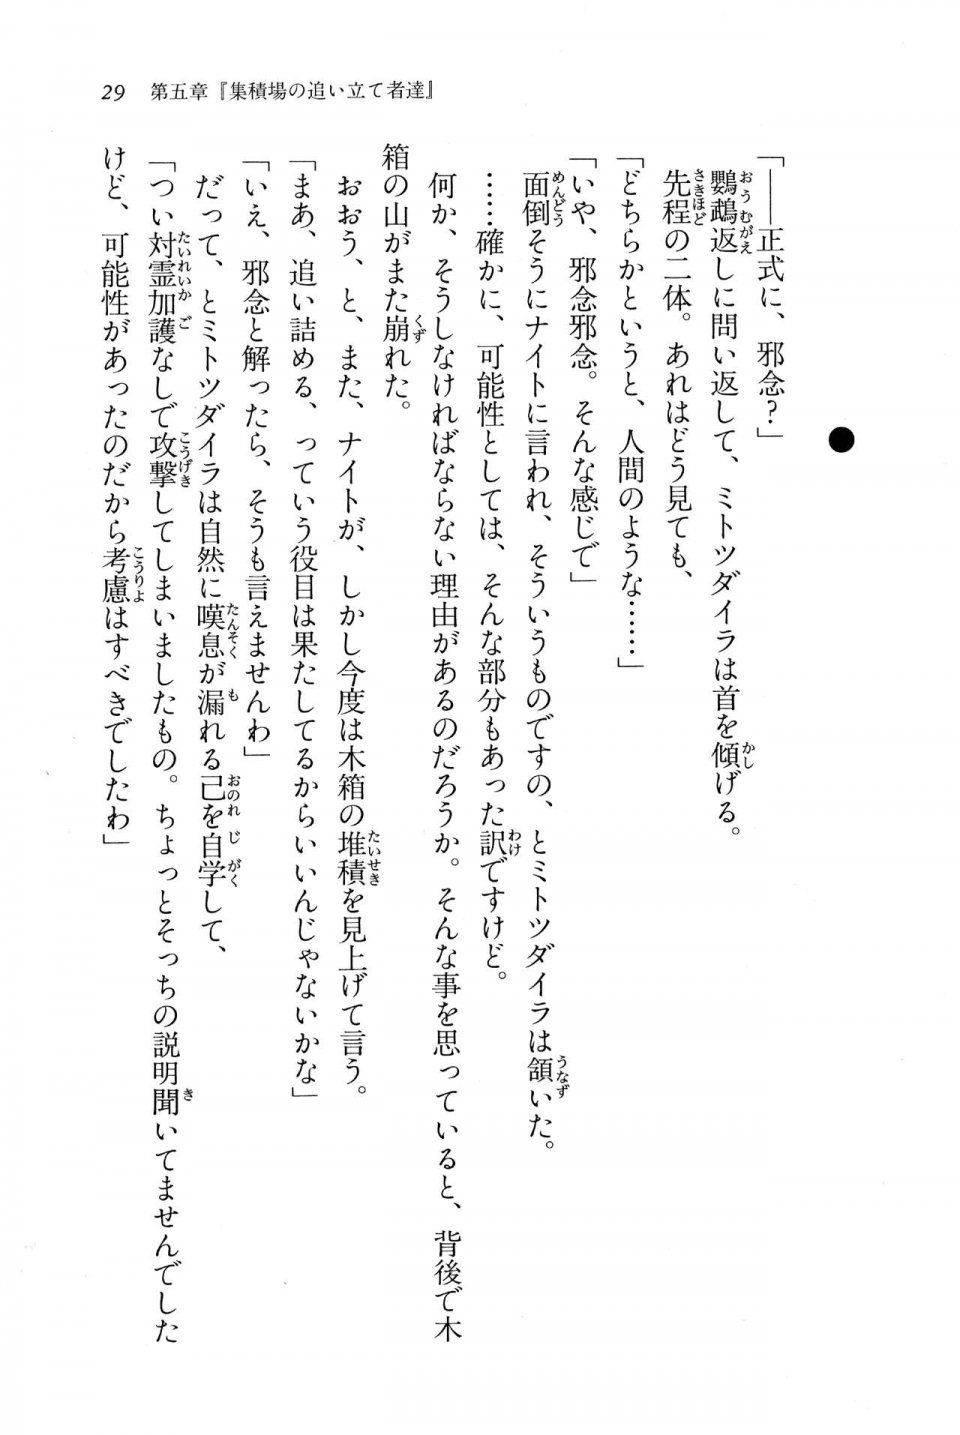 Kyoukai Senjou no Horizon BD Special Mininovel Vol 6(3B) - Photo #33